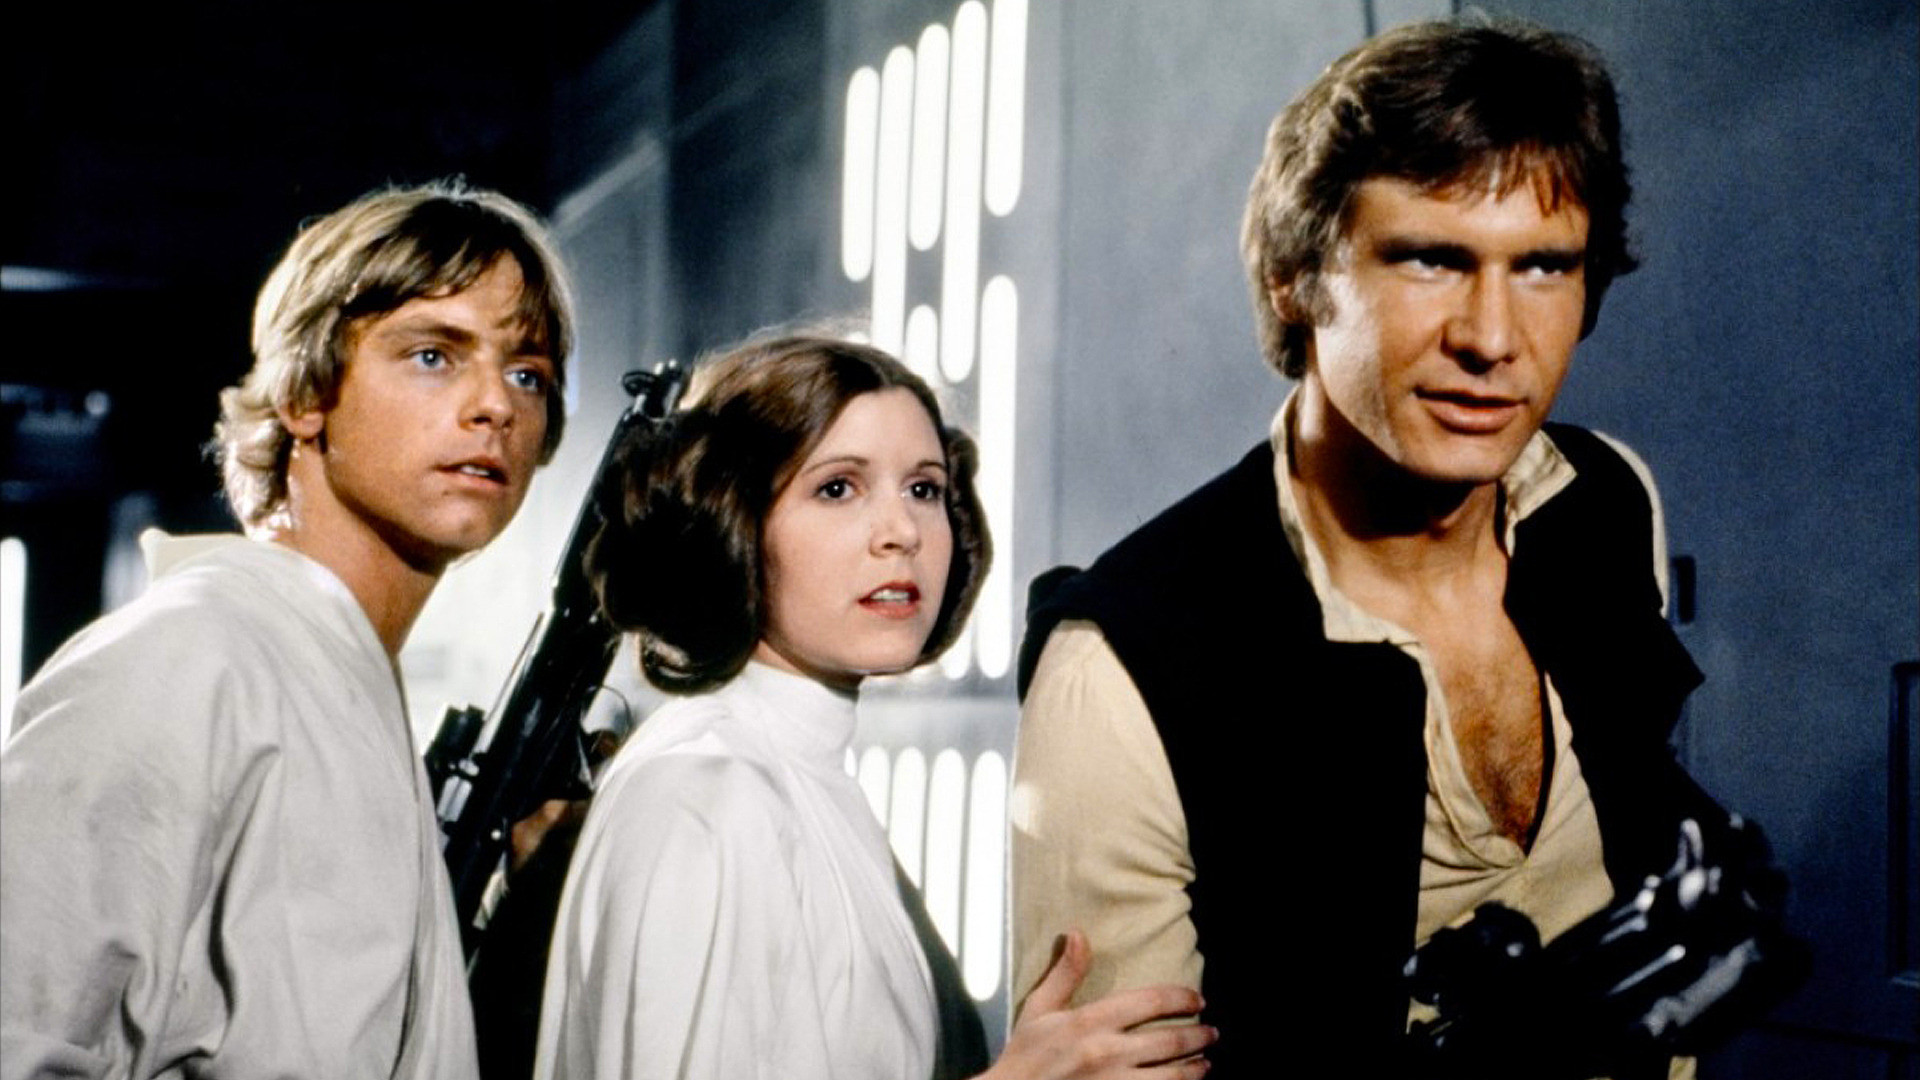 Star Wars Episode IV - A New Hope (1977)